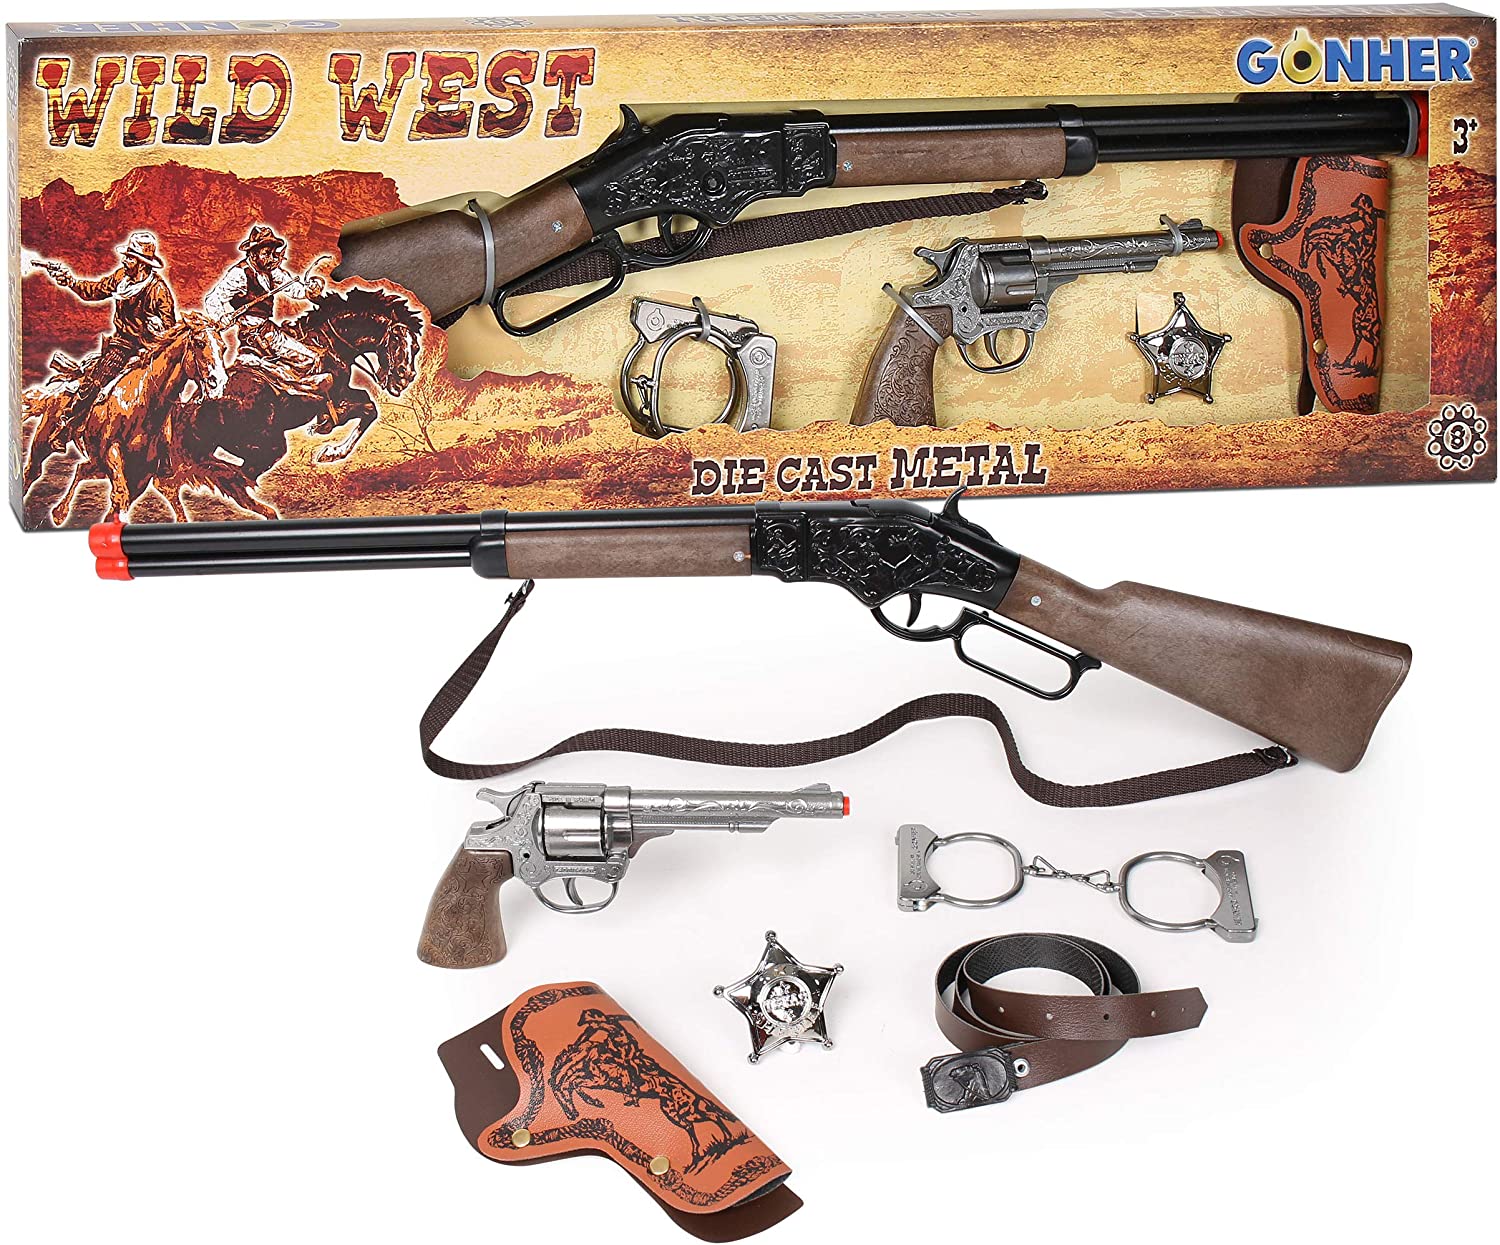 Gonher Toy Cowboy Rifle & Pistol Set 8 Shot